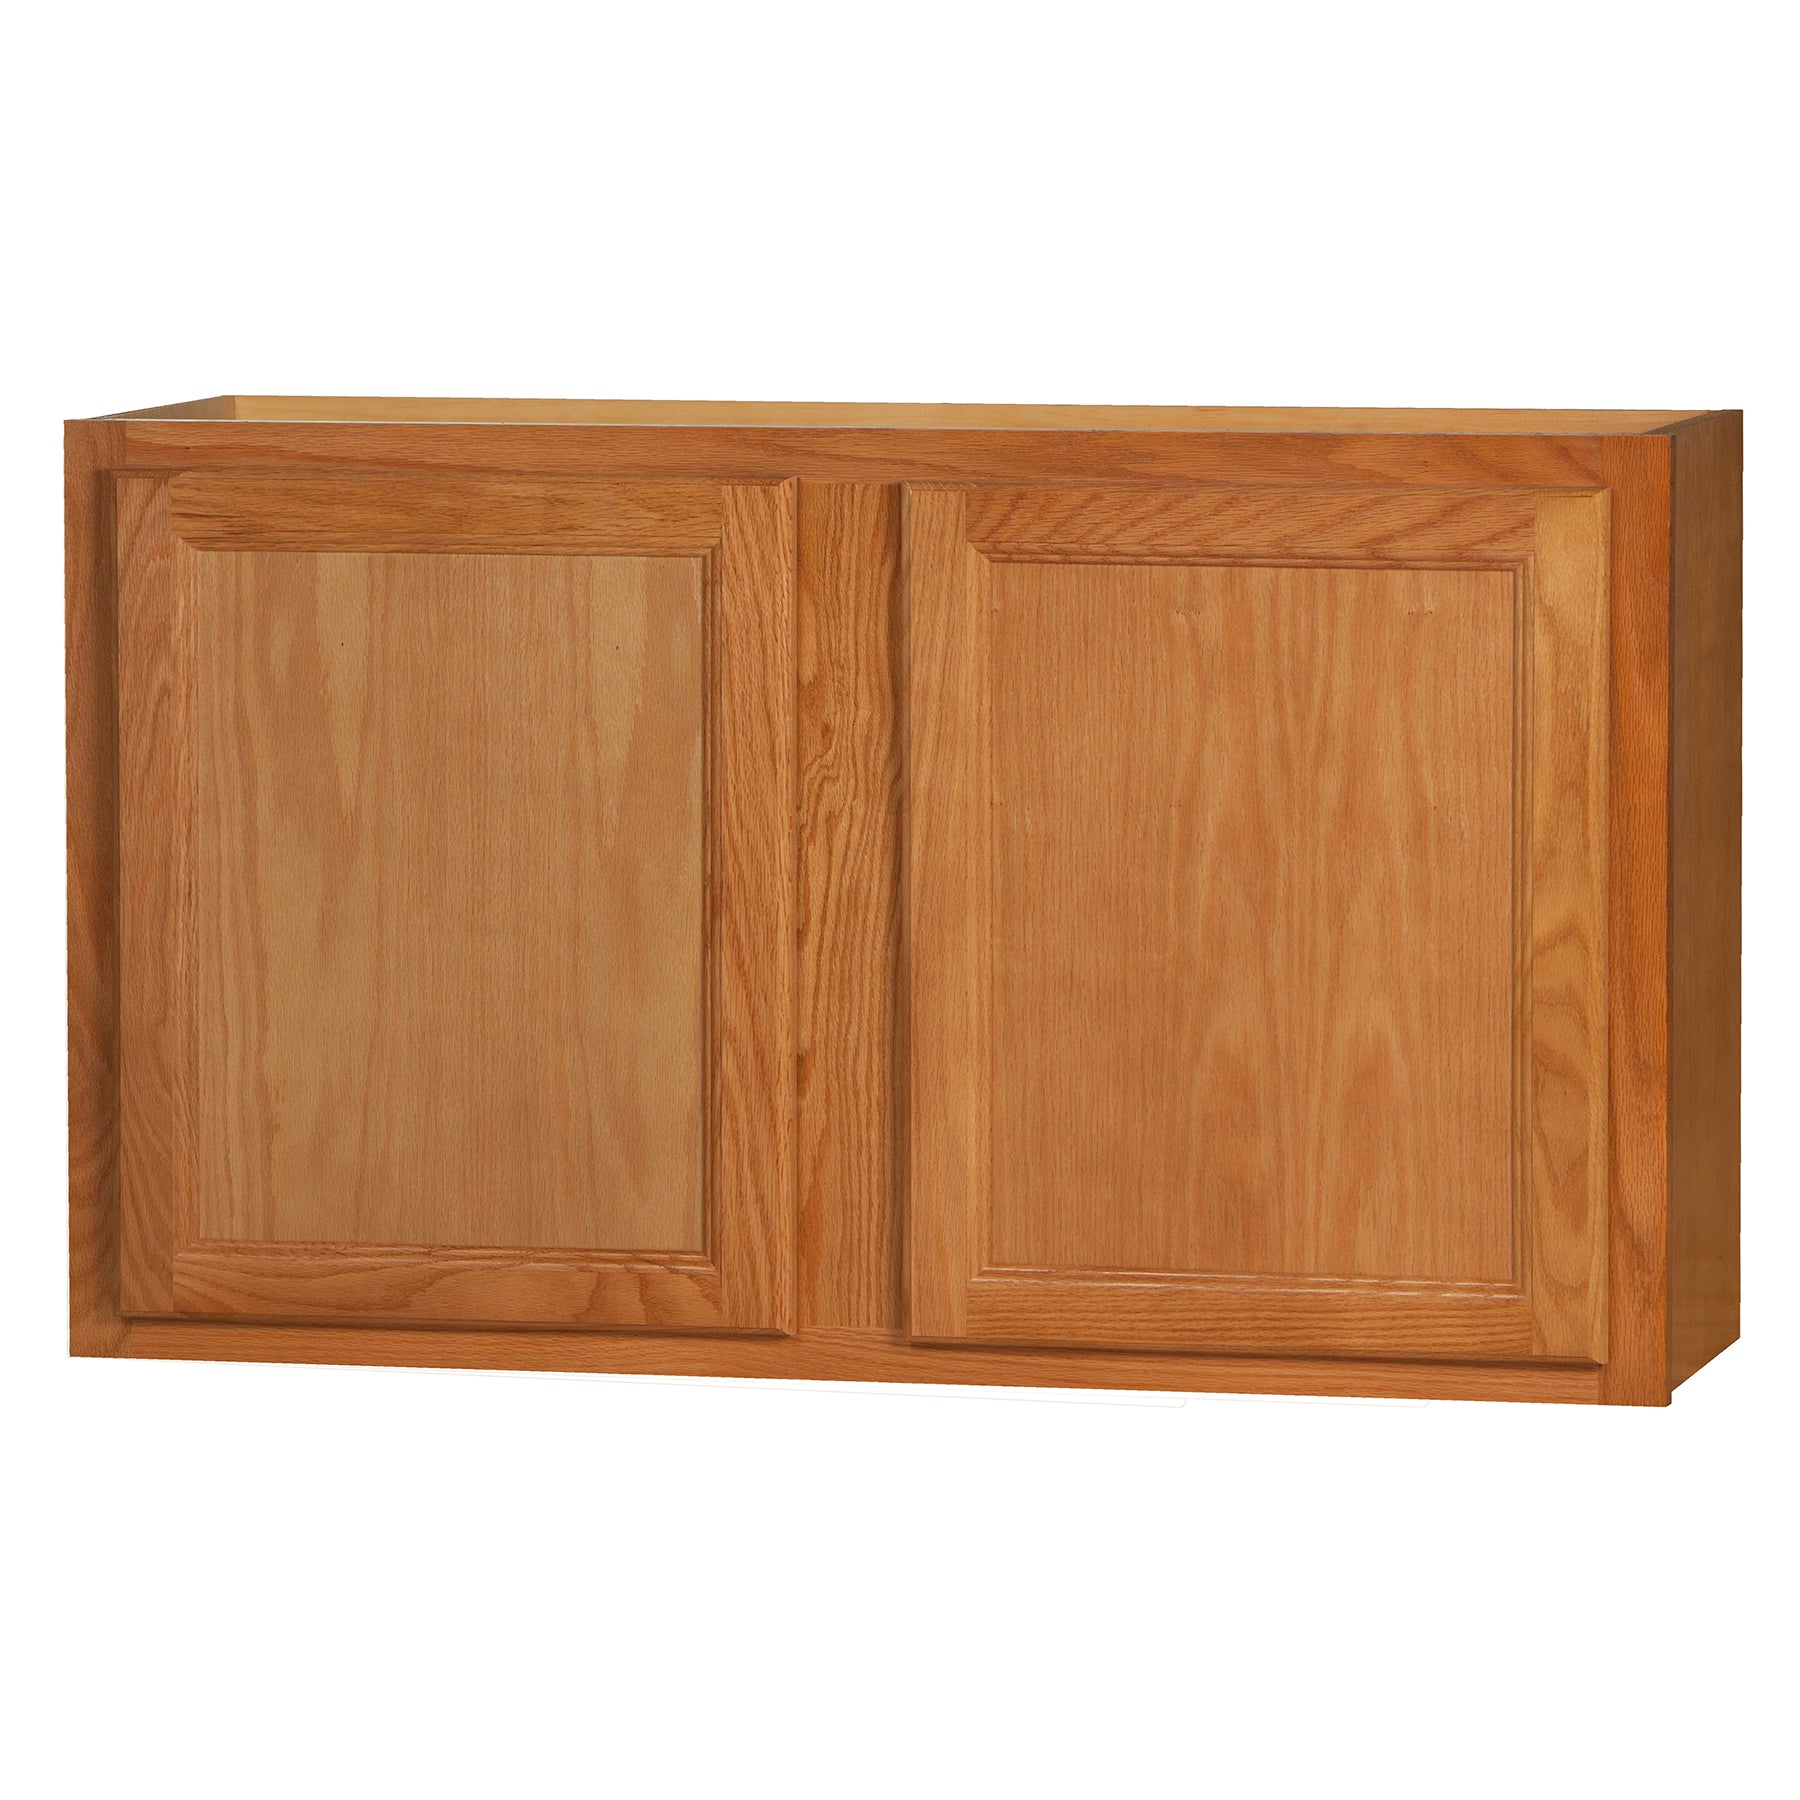 30 inch Wall Cabinets - Chadwood Shaker - 48 Inch W x 30 Inch H x 12 Inch D